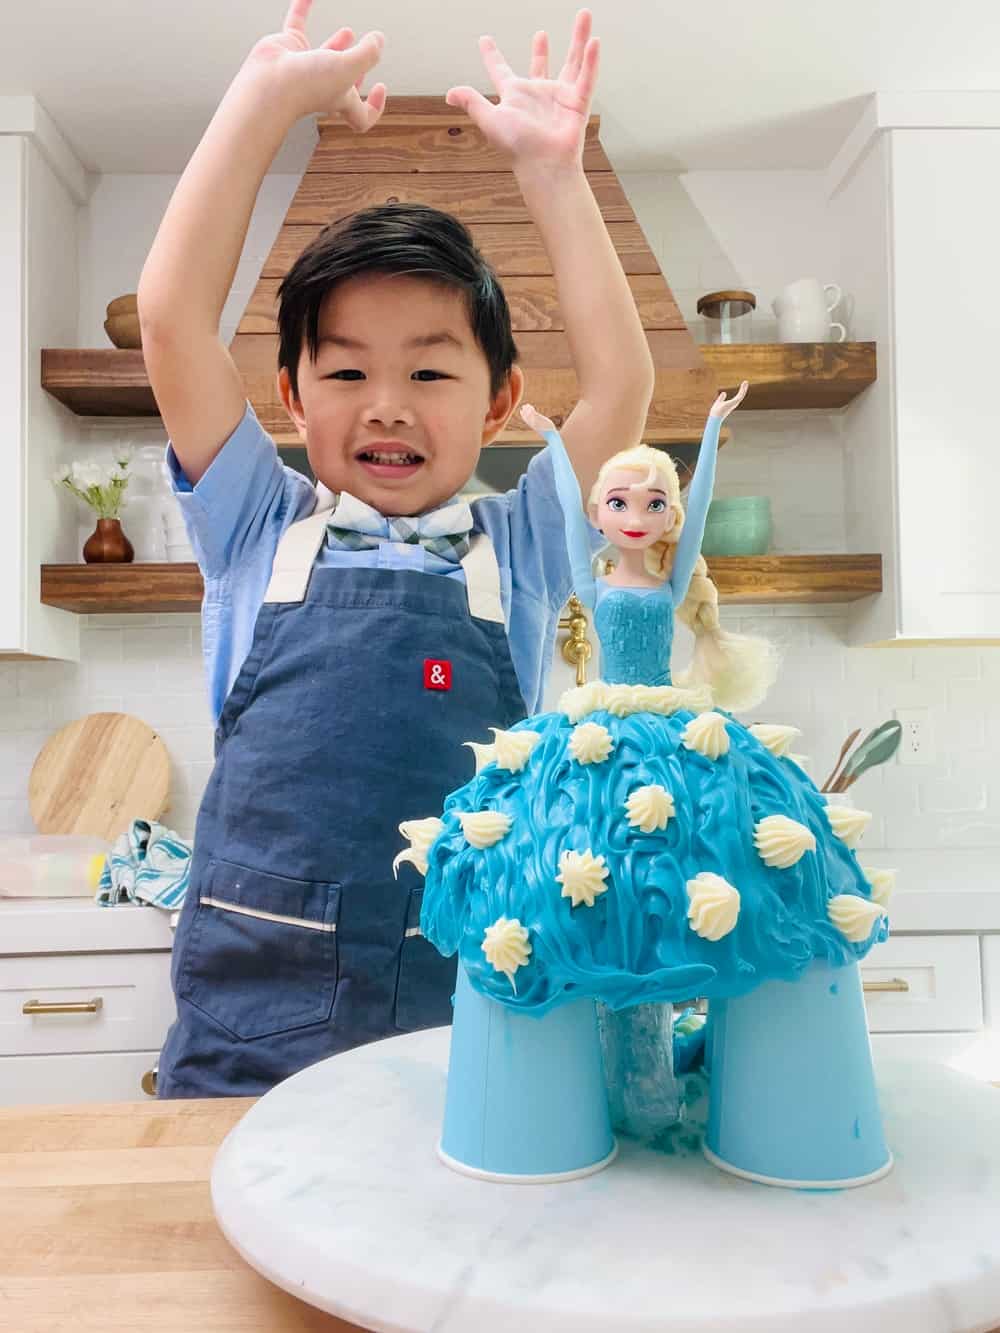 How to Make a 'Frozen' Elsa Cake | Become a Baking Rockstar - YouTube-happymobile.vn